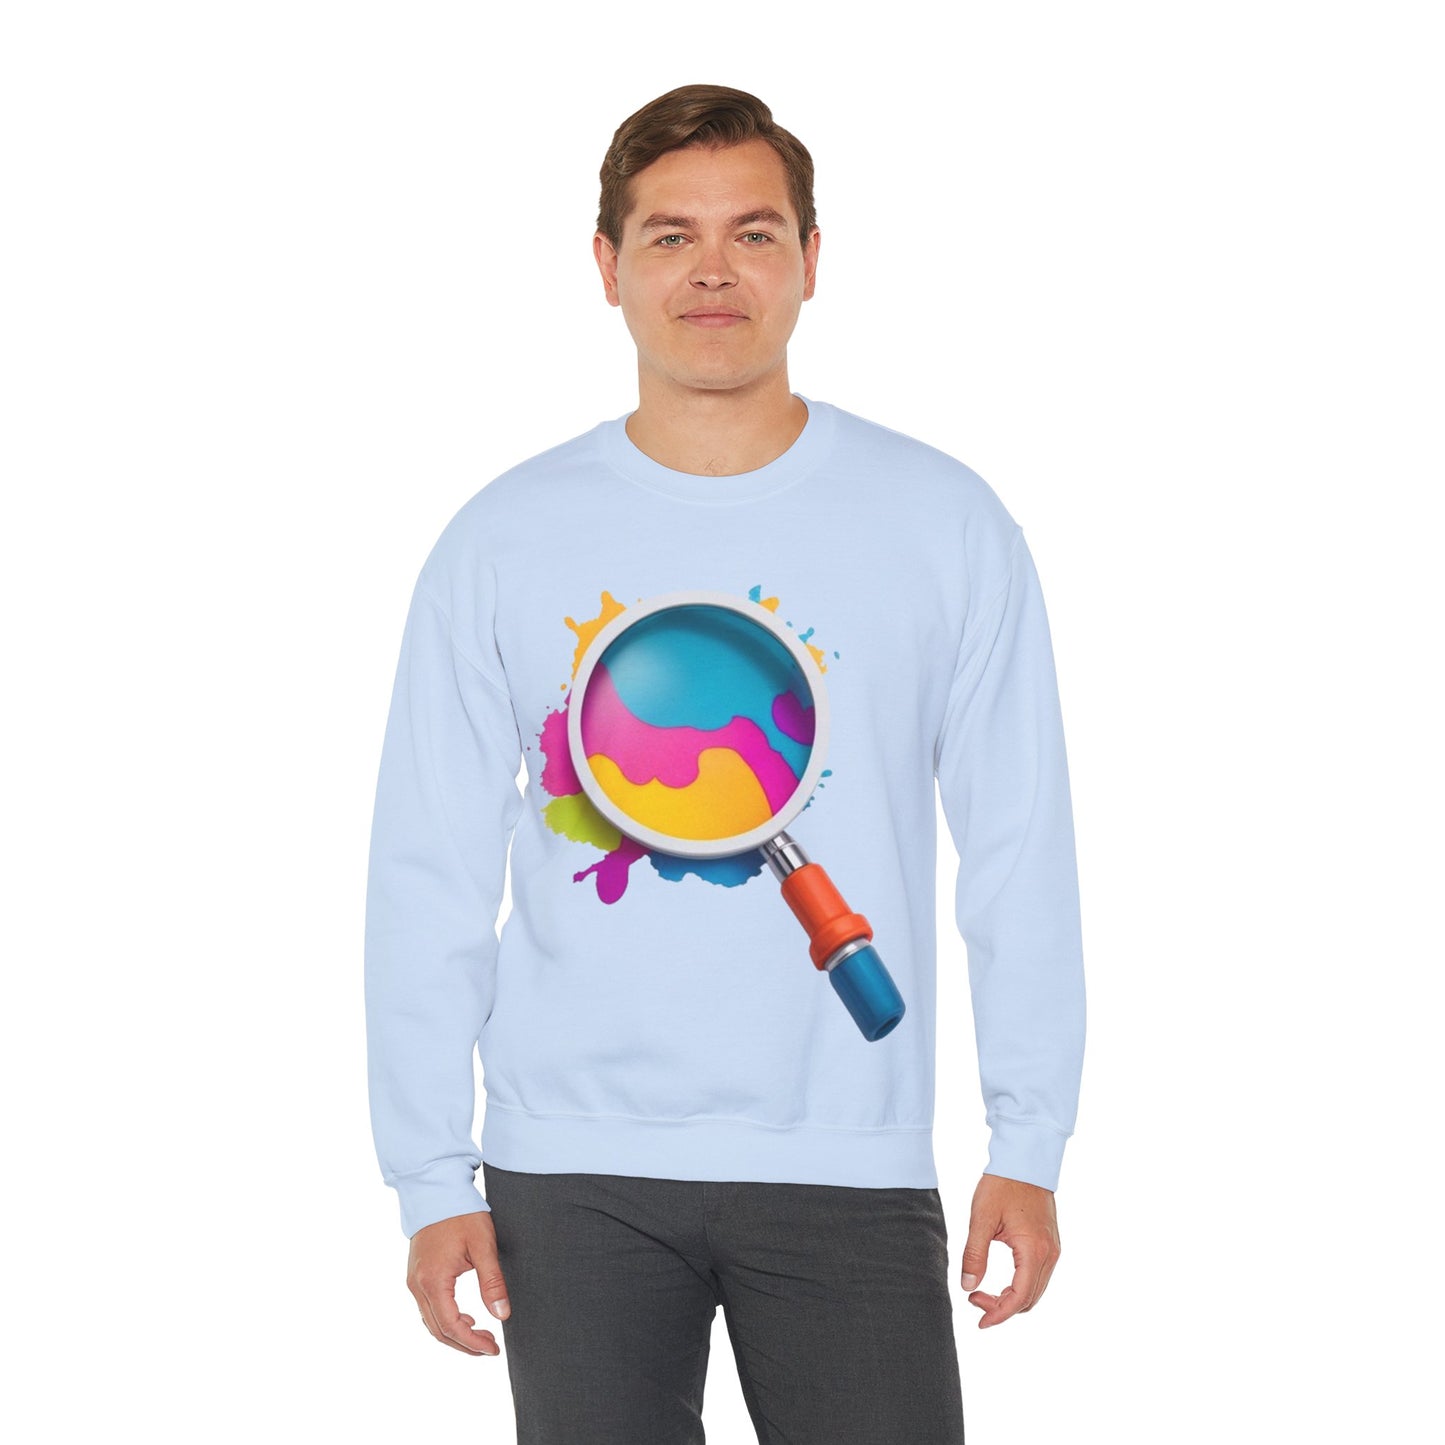 Colourful Magnifying Glass - Unisex Crewneck Sweatshirt